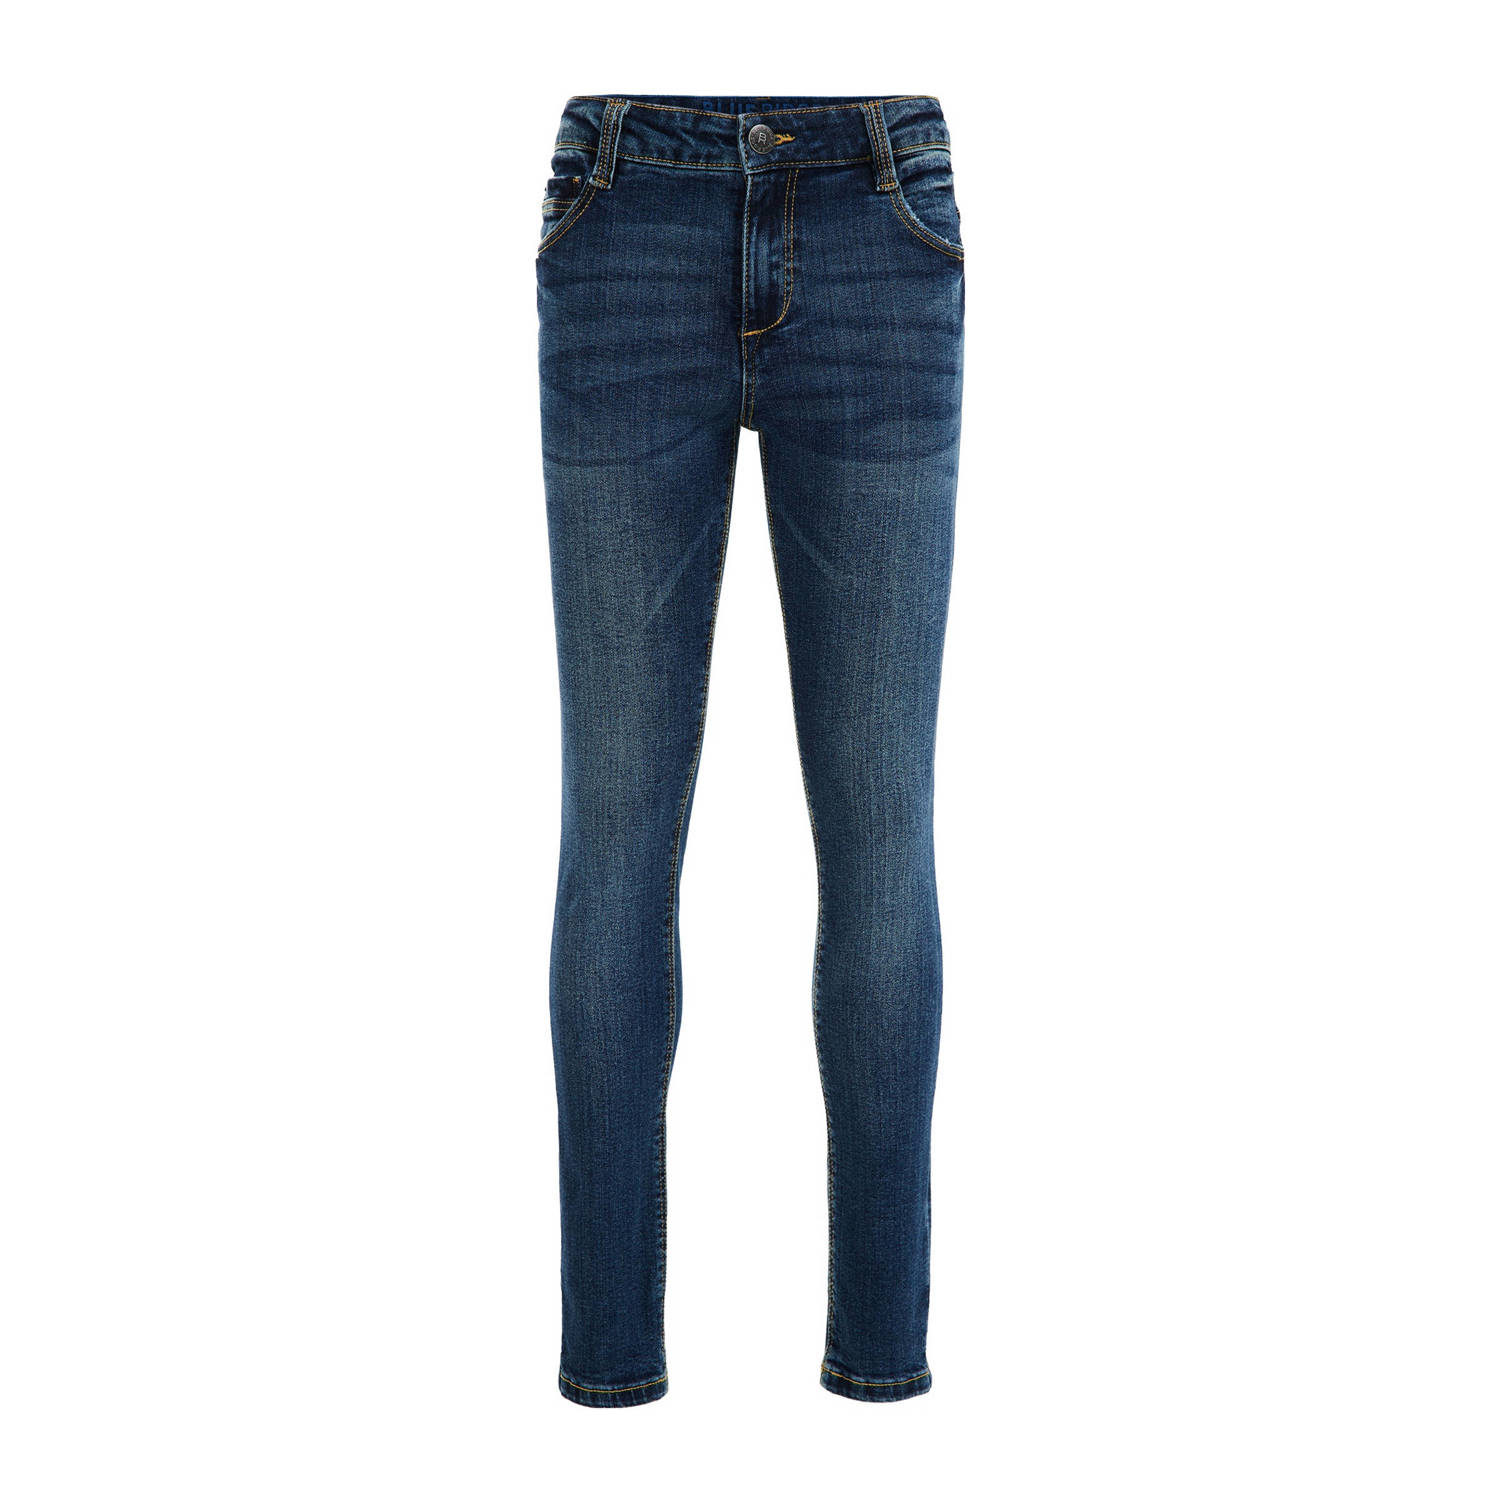 WE Fashion Blue Ridge skinny jeans used denim